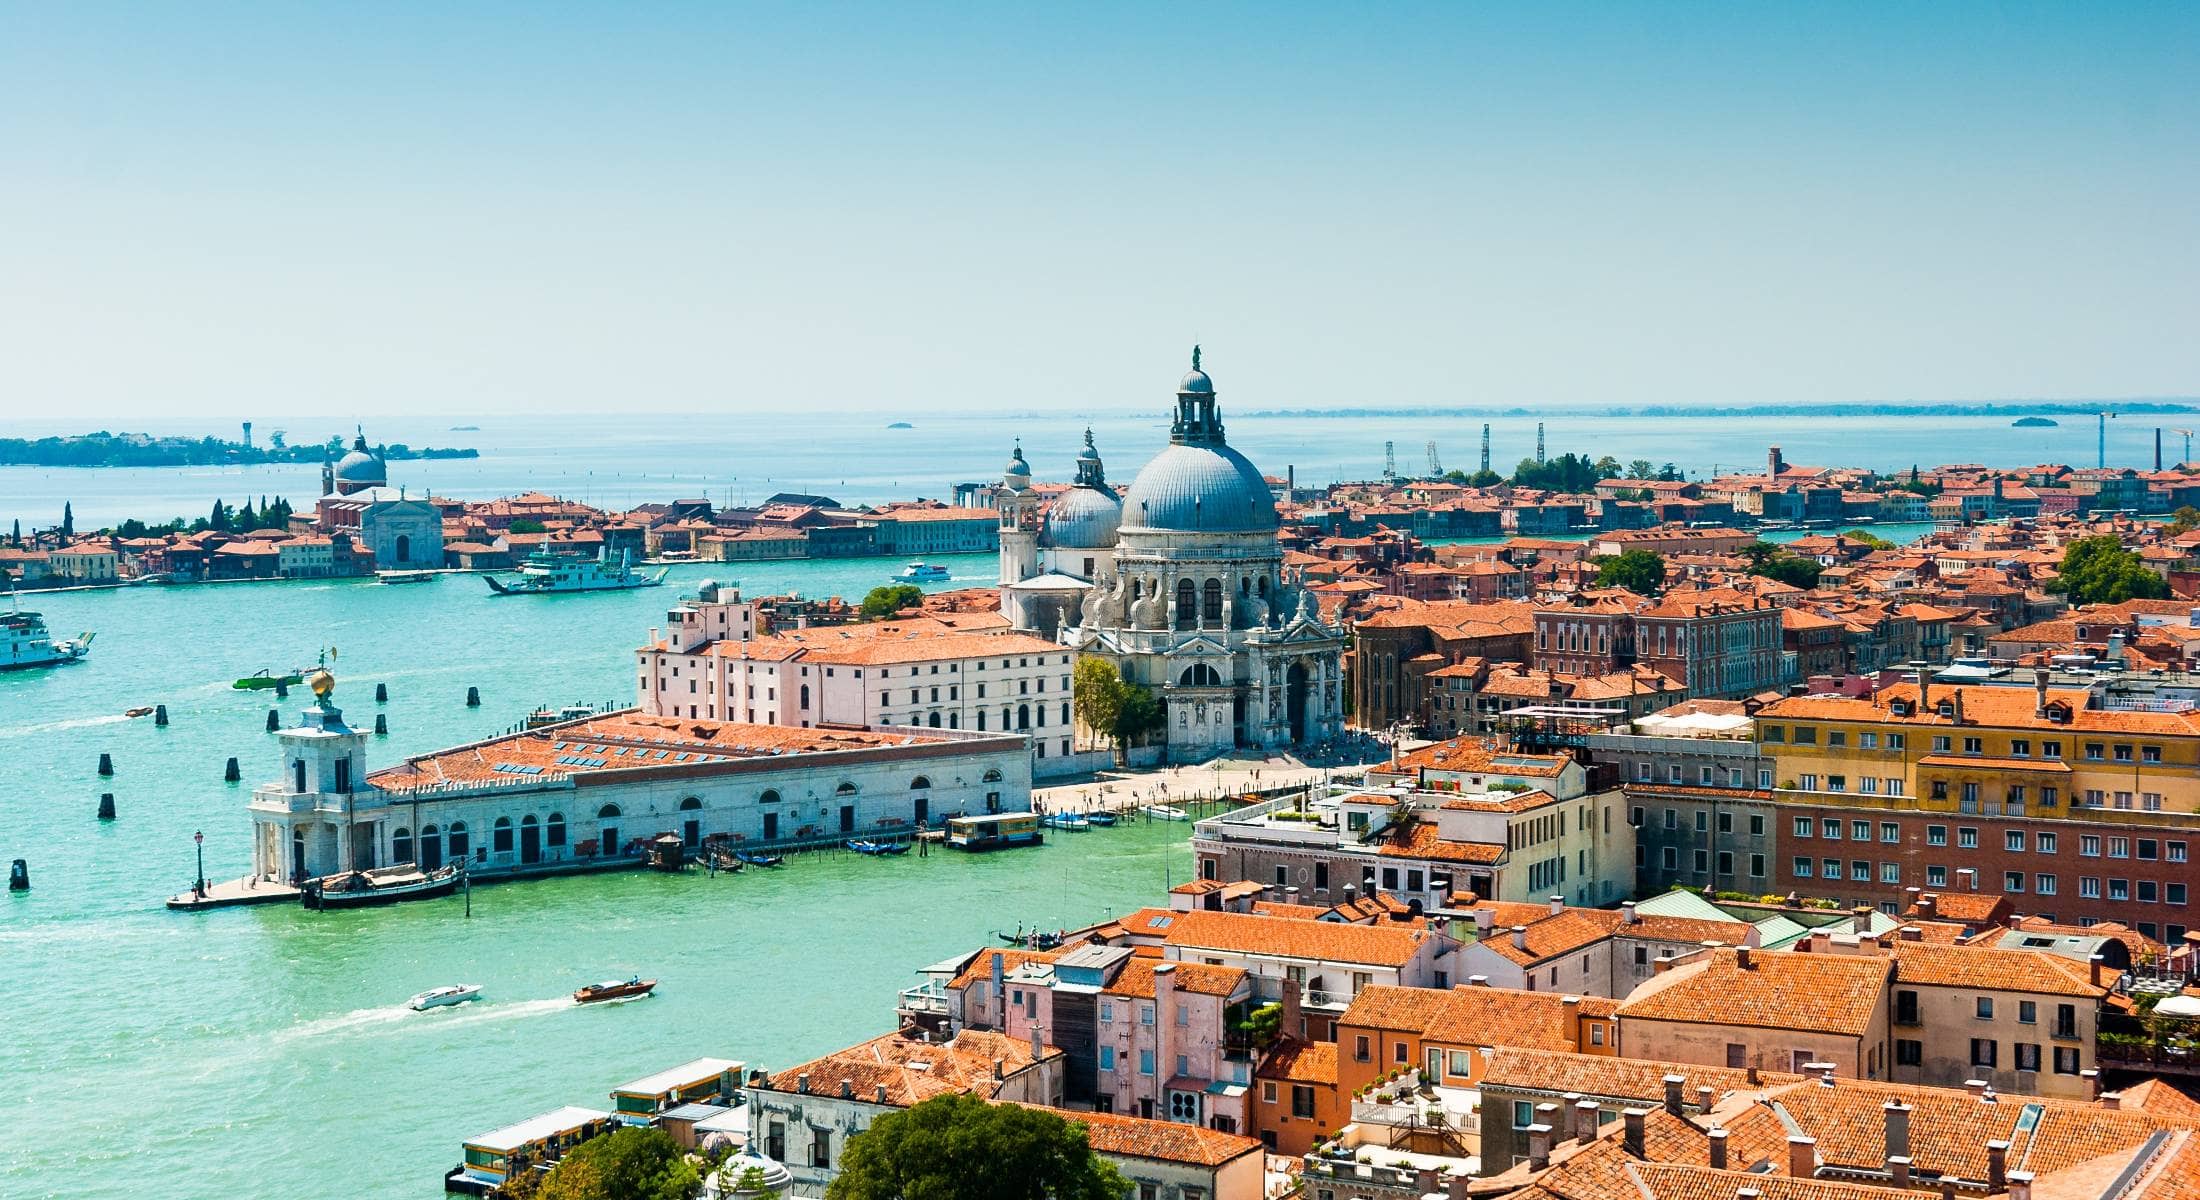 Albergo San Marco in Venice - Book a luxury hotel near to St. Mark's Square